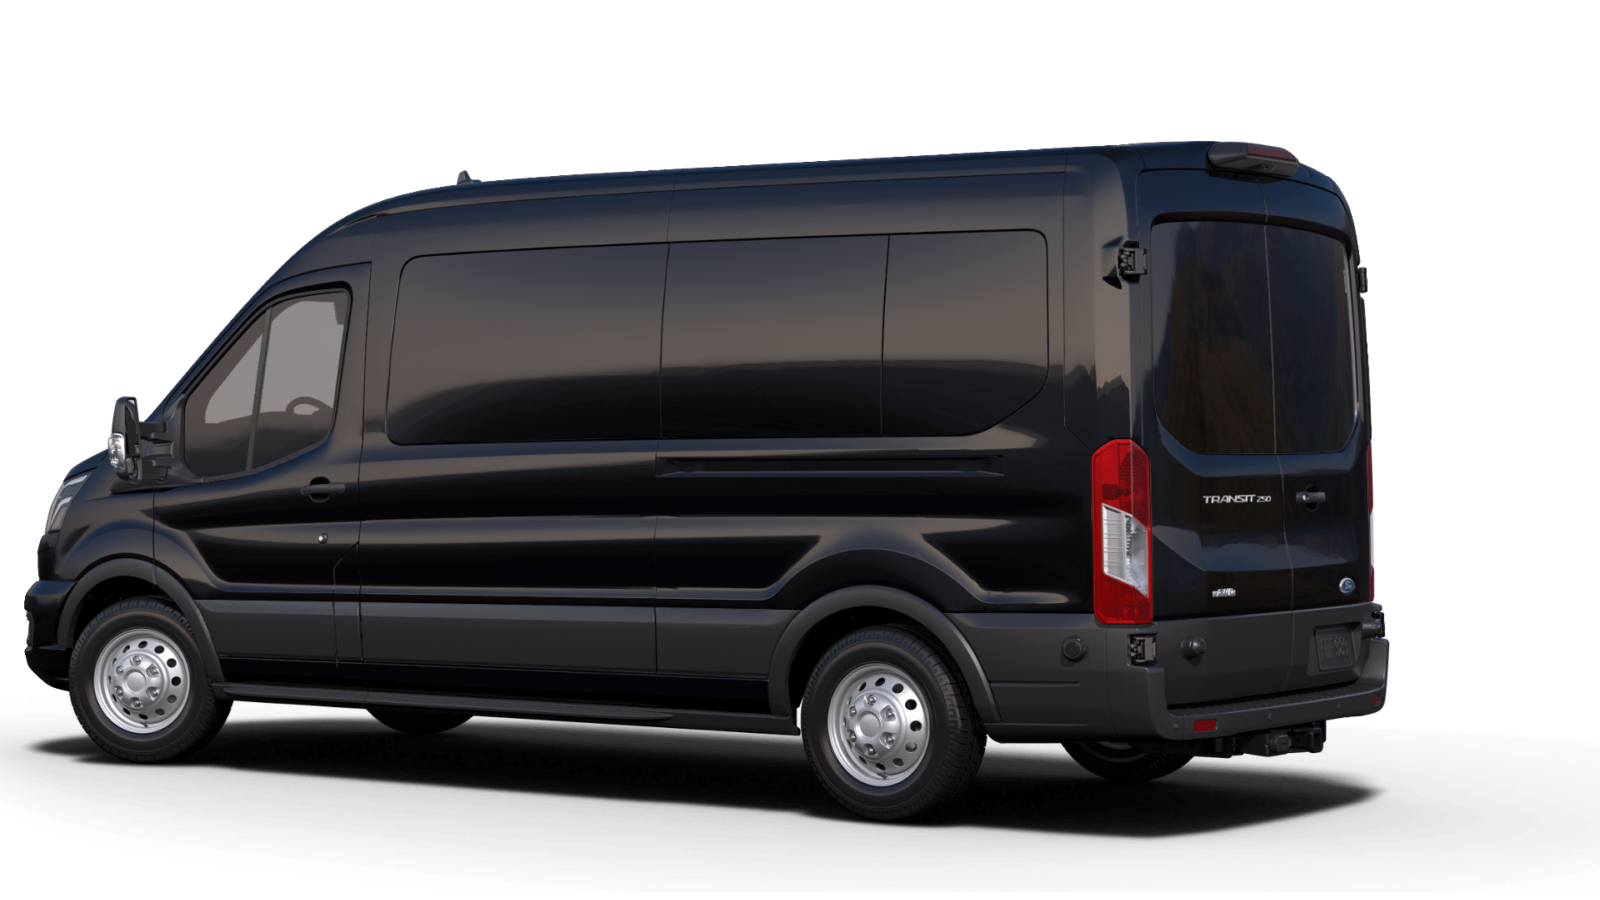 15 passenger van rental available near me